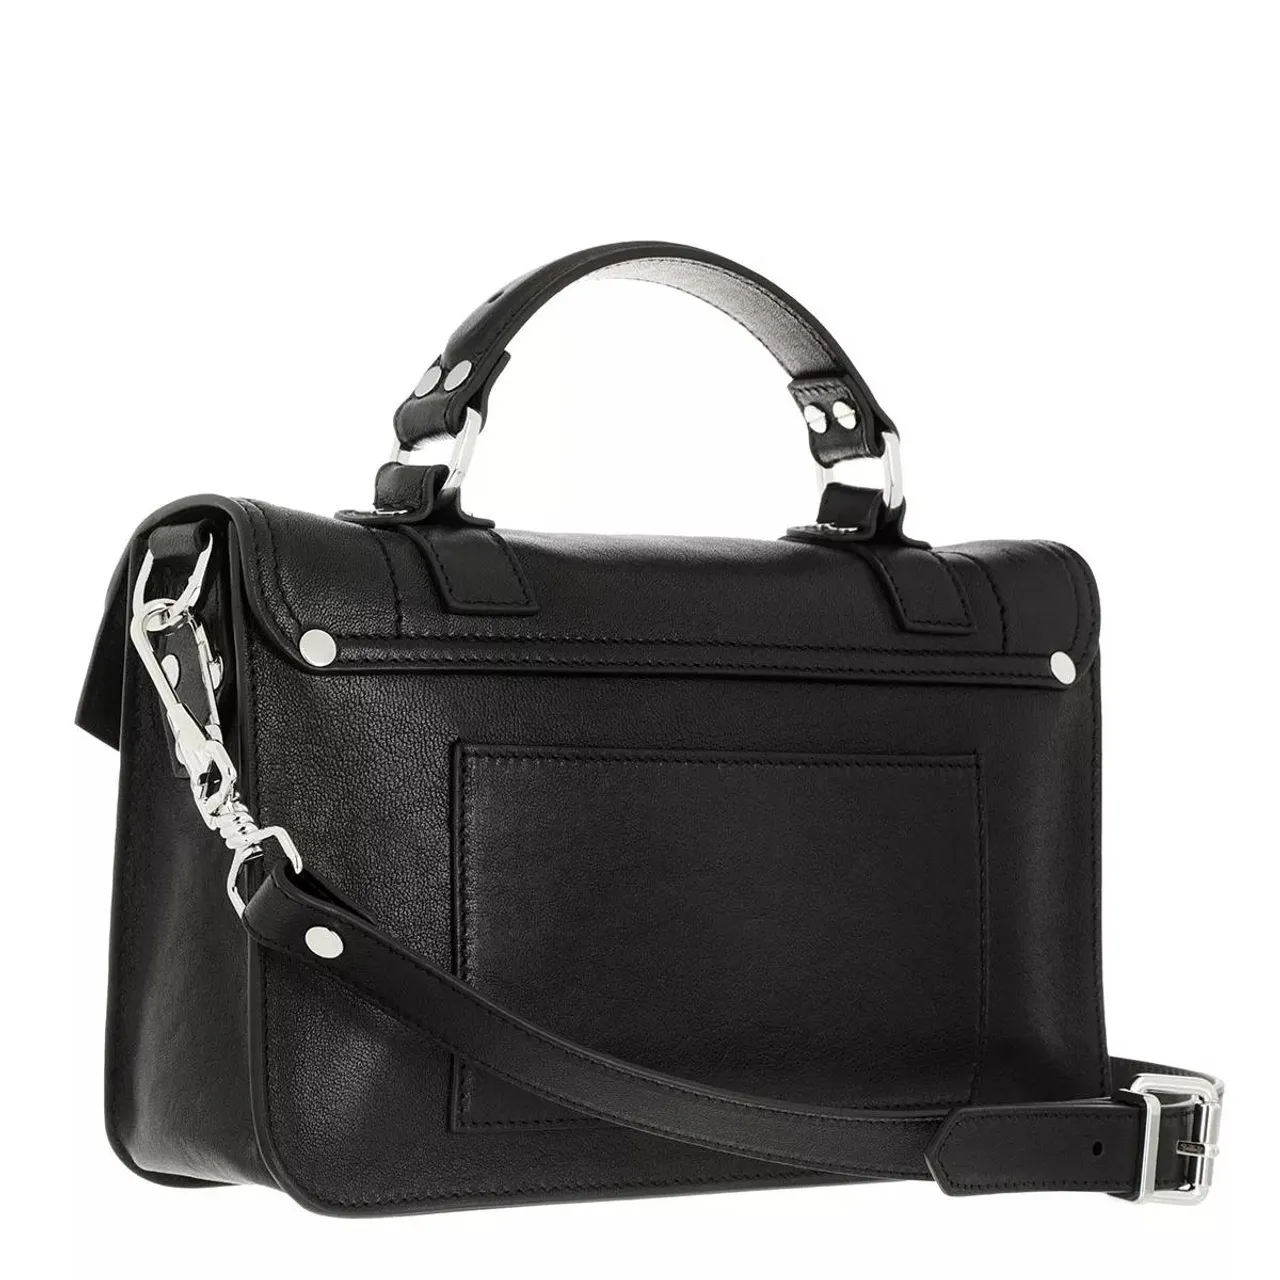 Proenza Schouler Satchels - PS1 Tiny Bag - black - Satchels for ladies